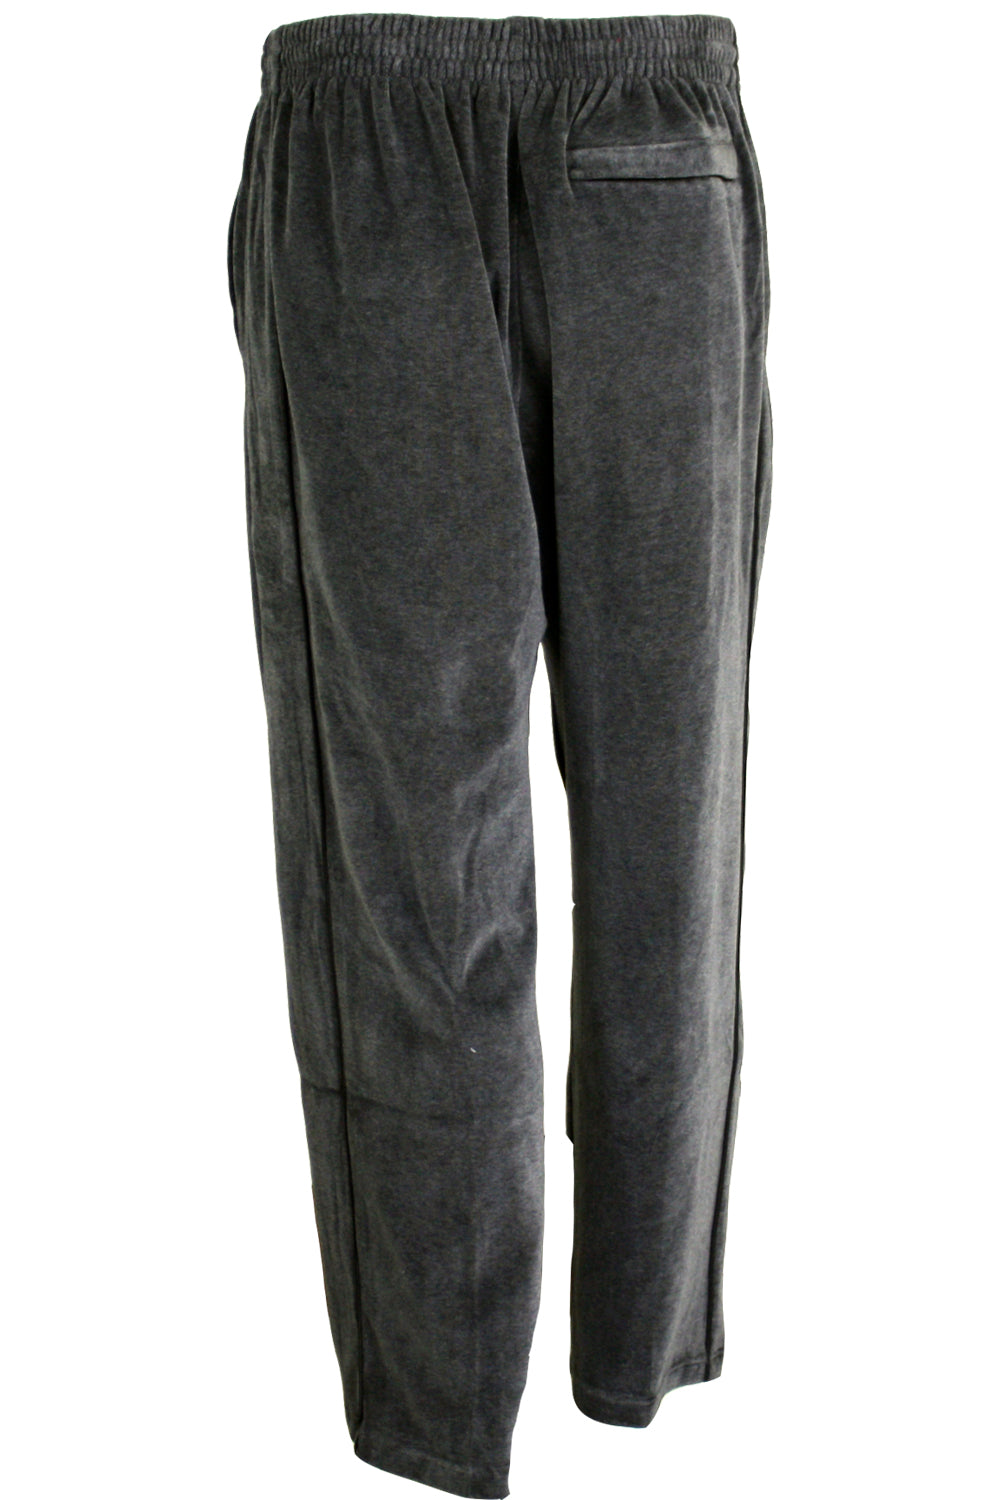 Mens Charcoal Gray Velour Pants | Sweatpants | Sweatsedo